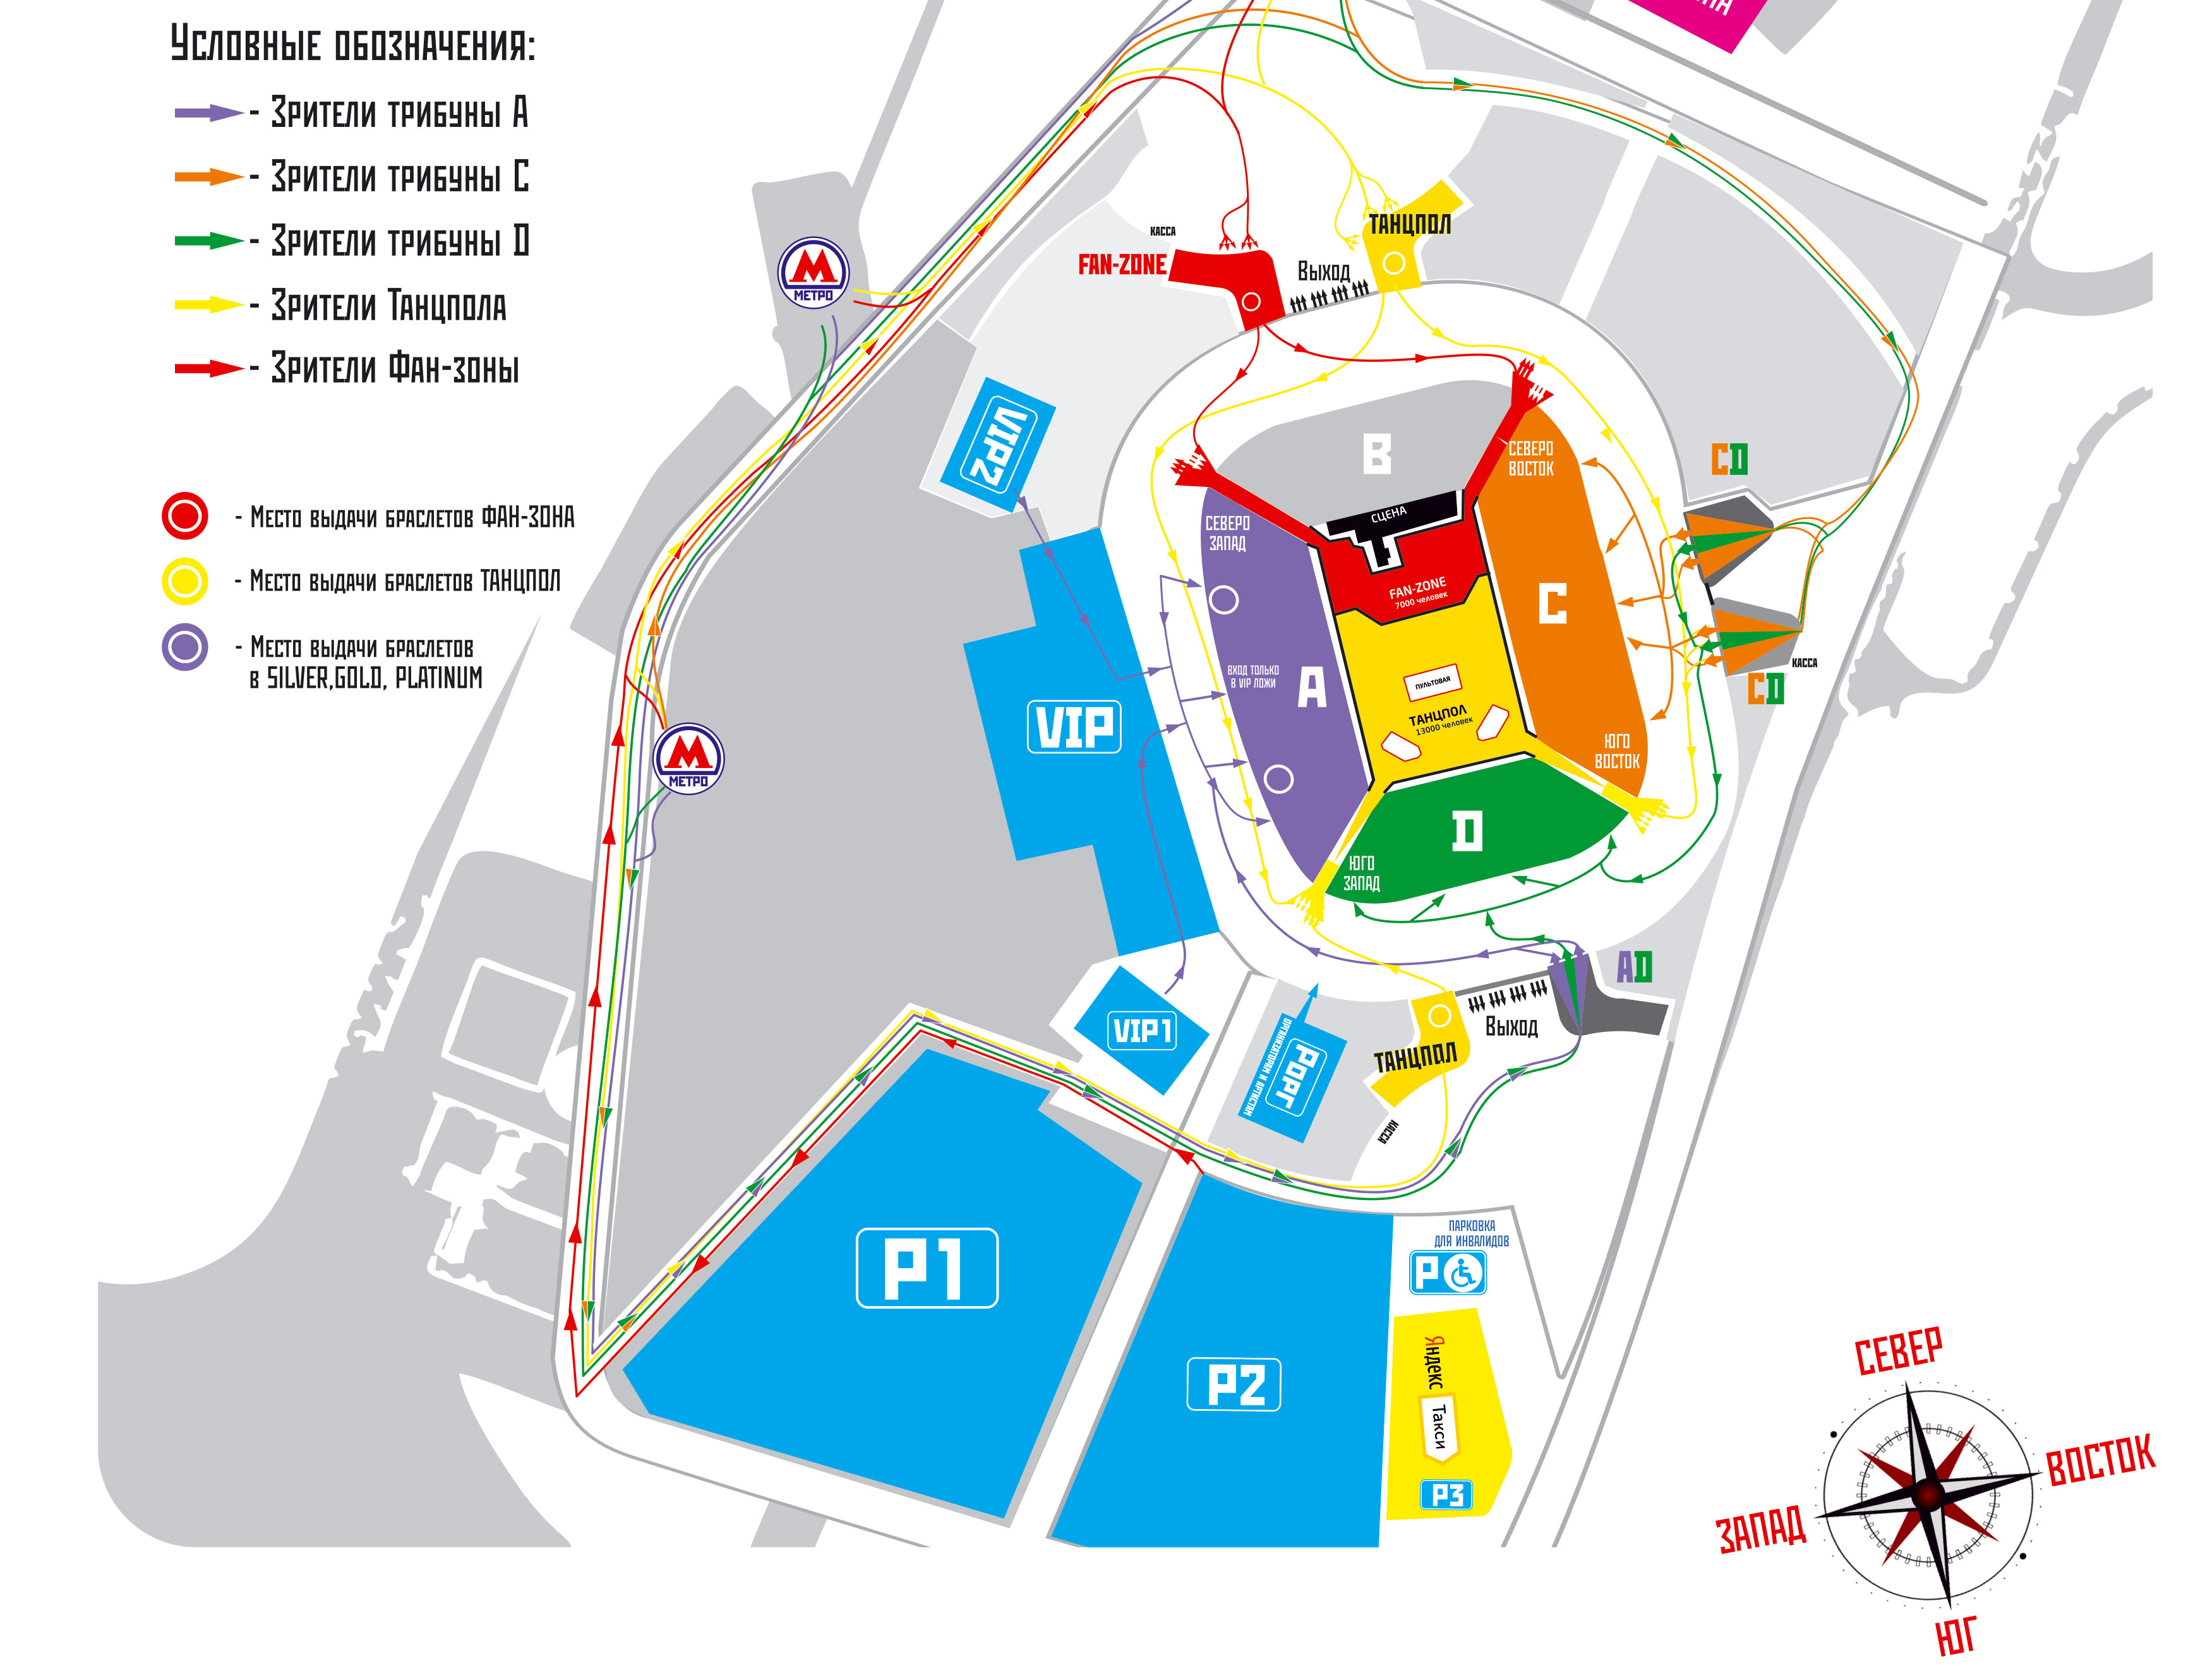 Карта стадиона арена. Открытие Арена схема территории. Открытие Арена схема прохода. План схема стадиона открытие Арена.